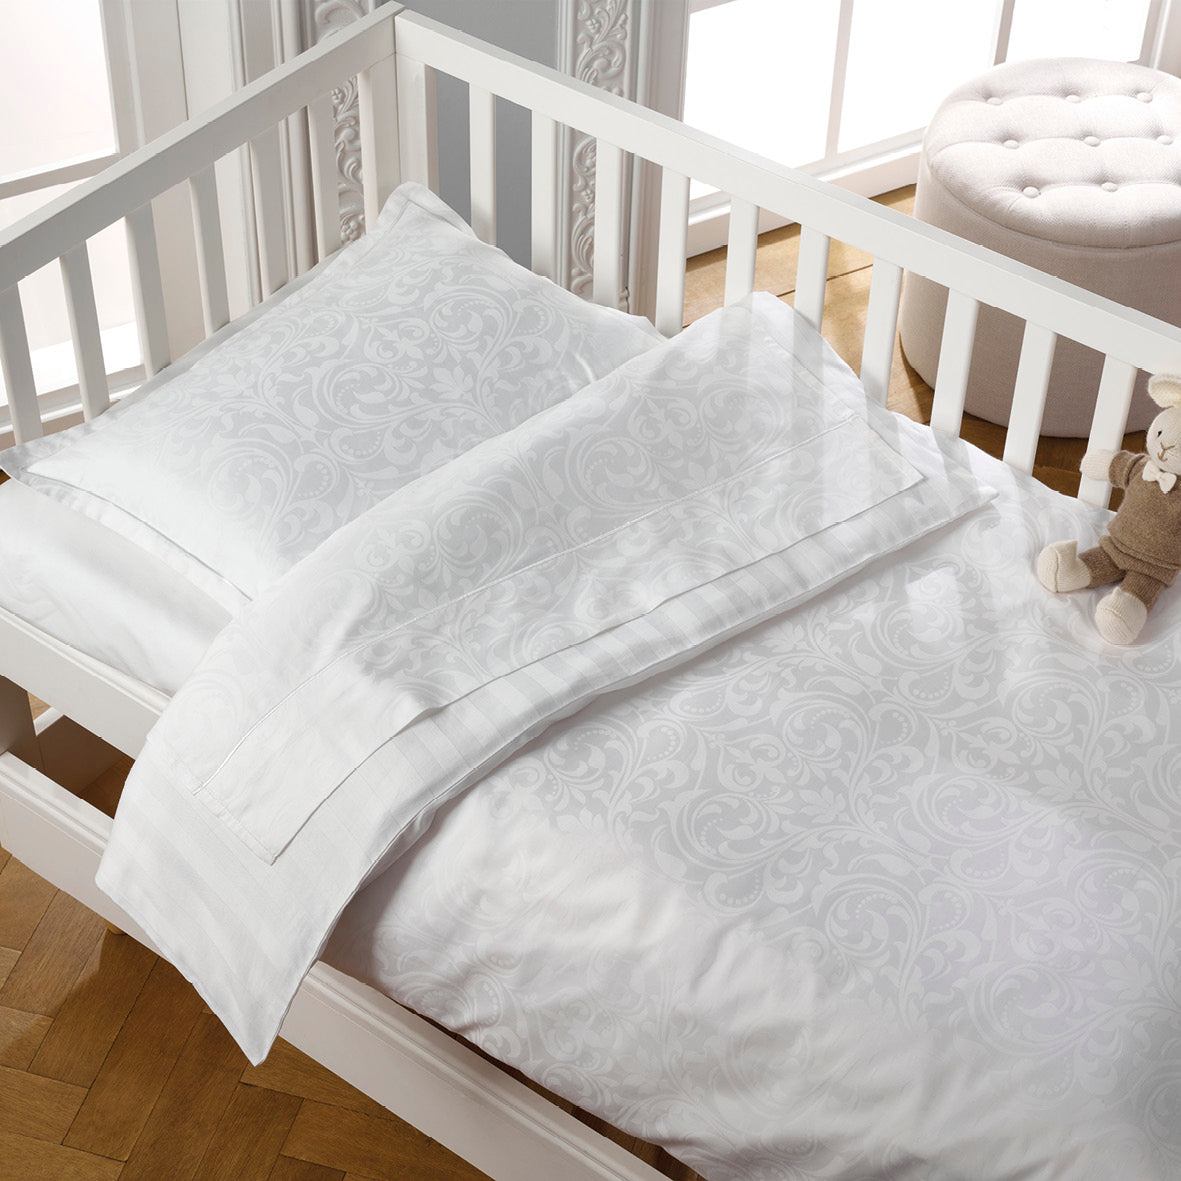 Baby blanket cotton satin Jacquard woven Victorian White - 80 x 120 cm